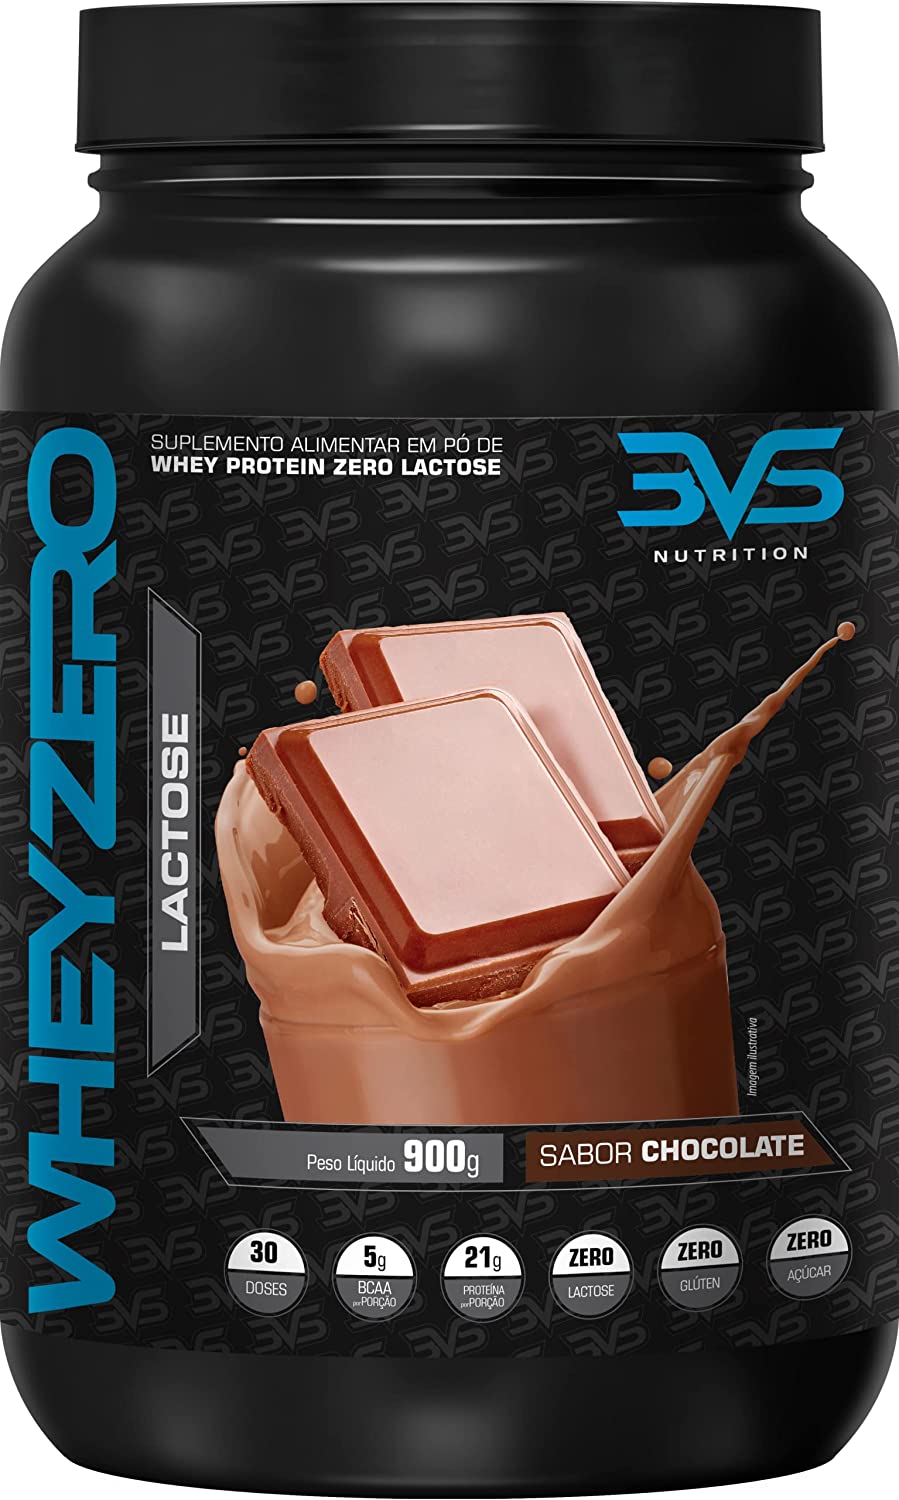 Whey Zero Lactose 900g – 3VS Nutrition – Chocolate